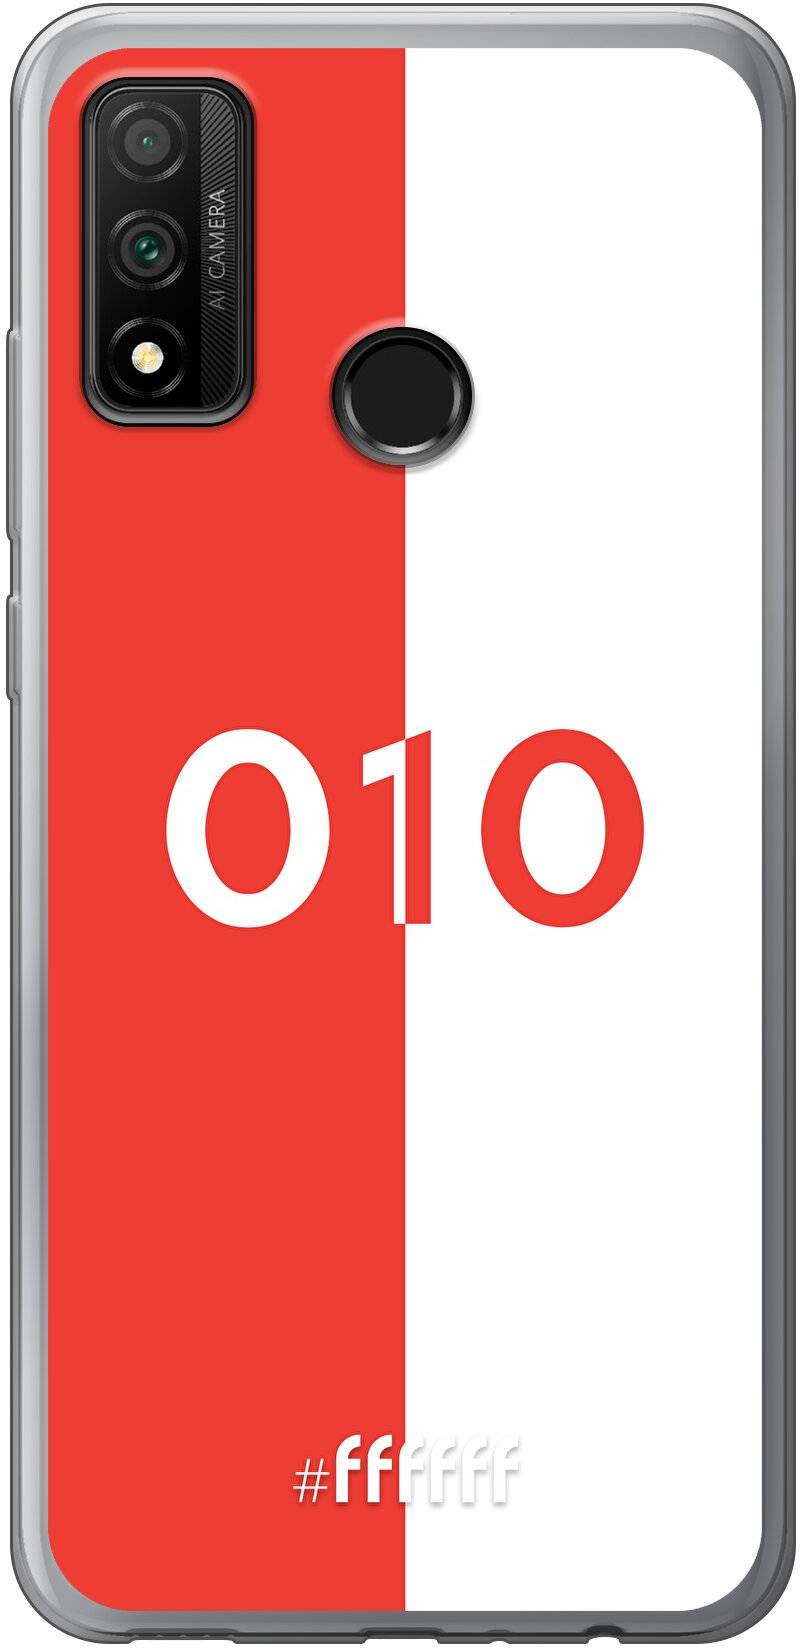 Feyenoord - 010 P Smart (2020)